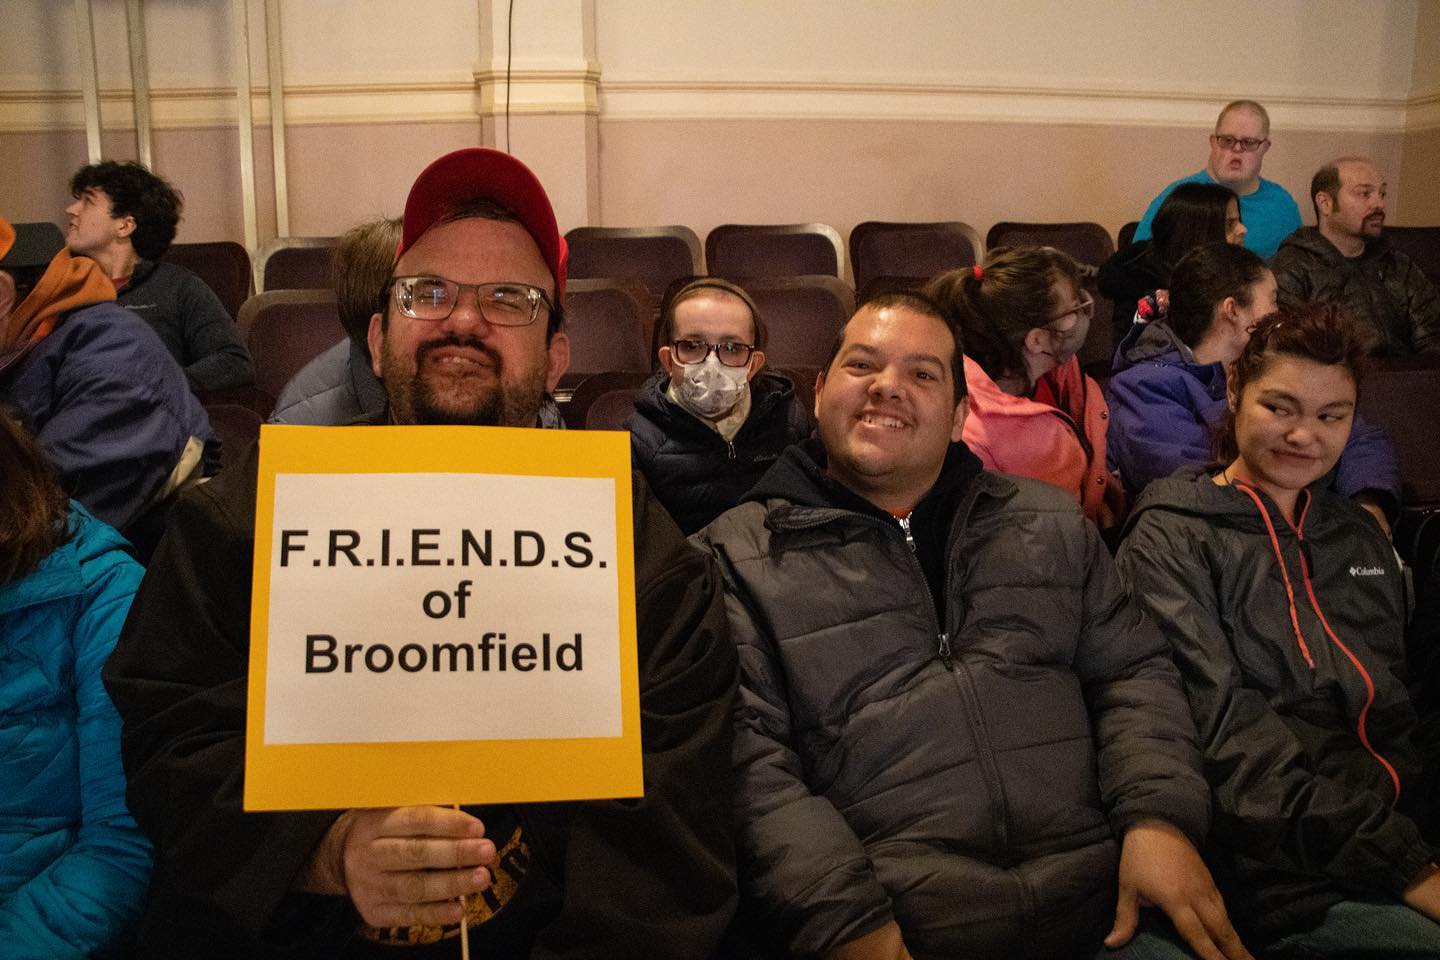 Friends of Broomfield...